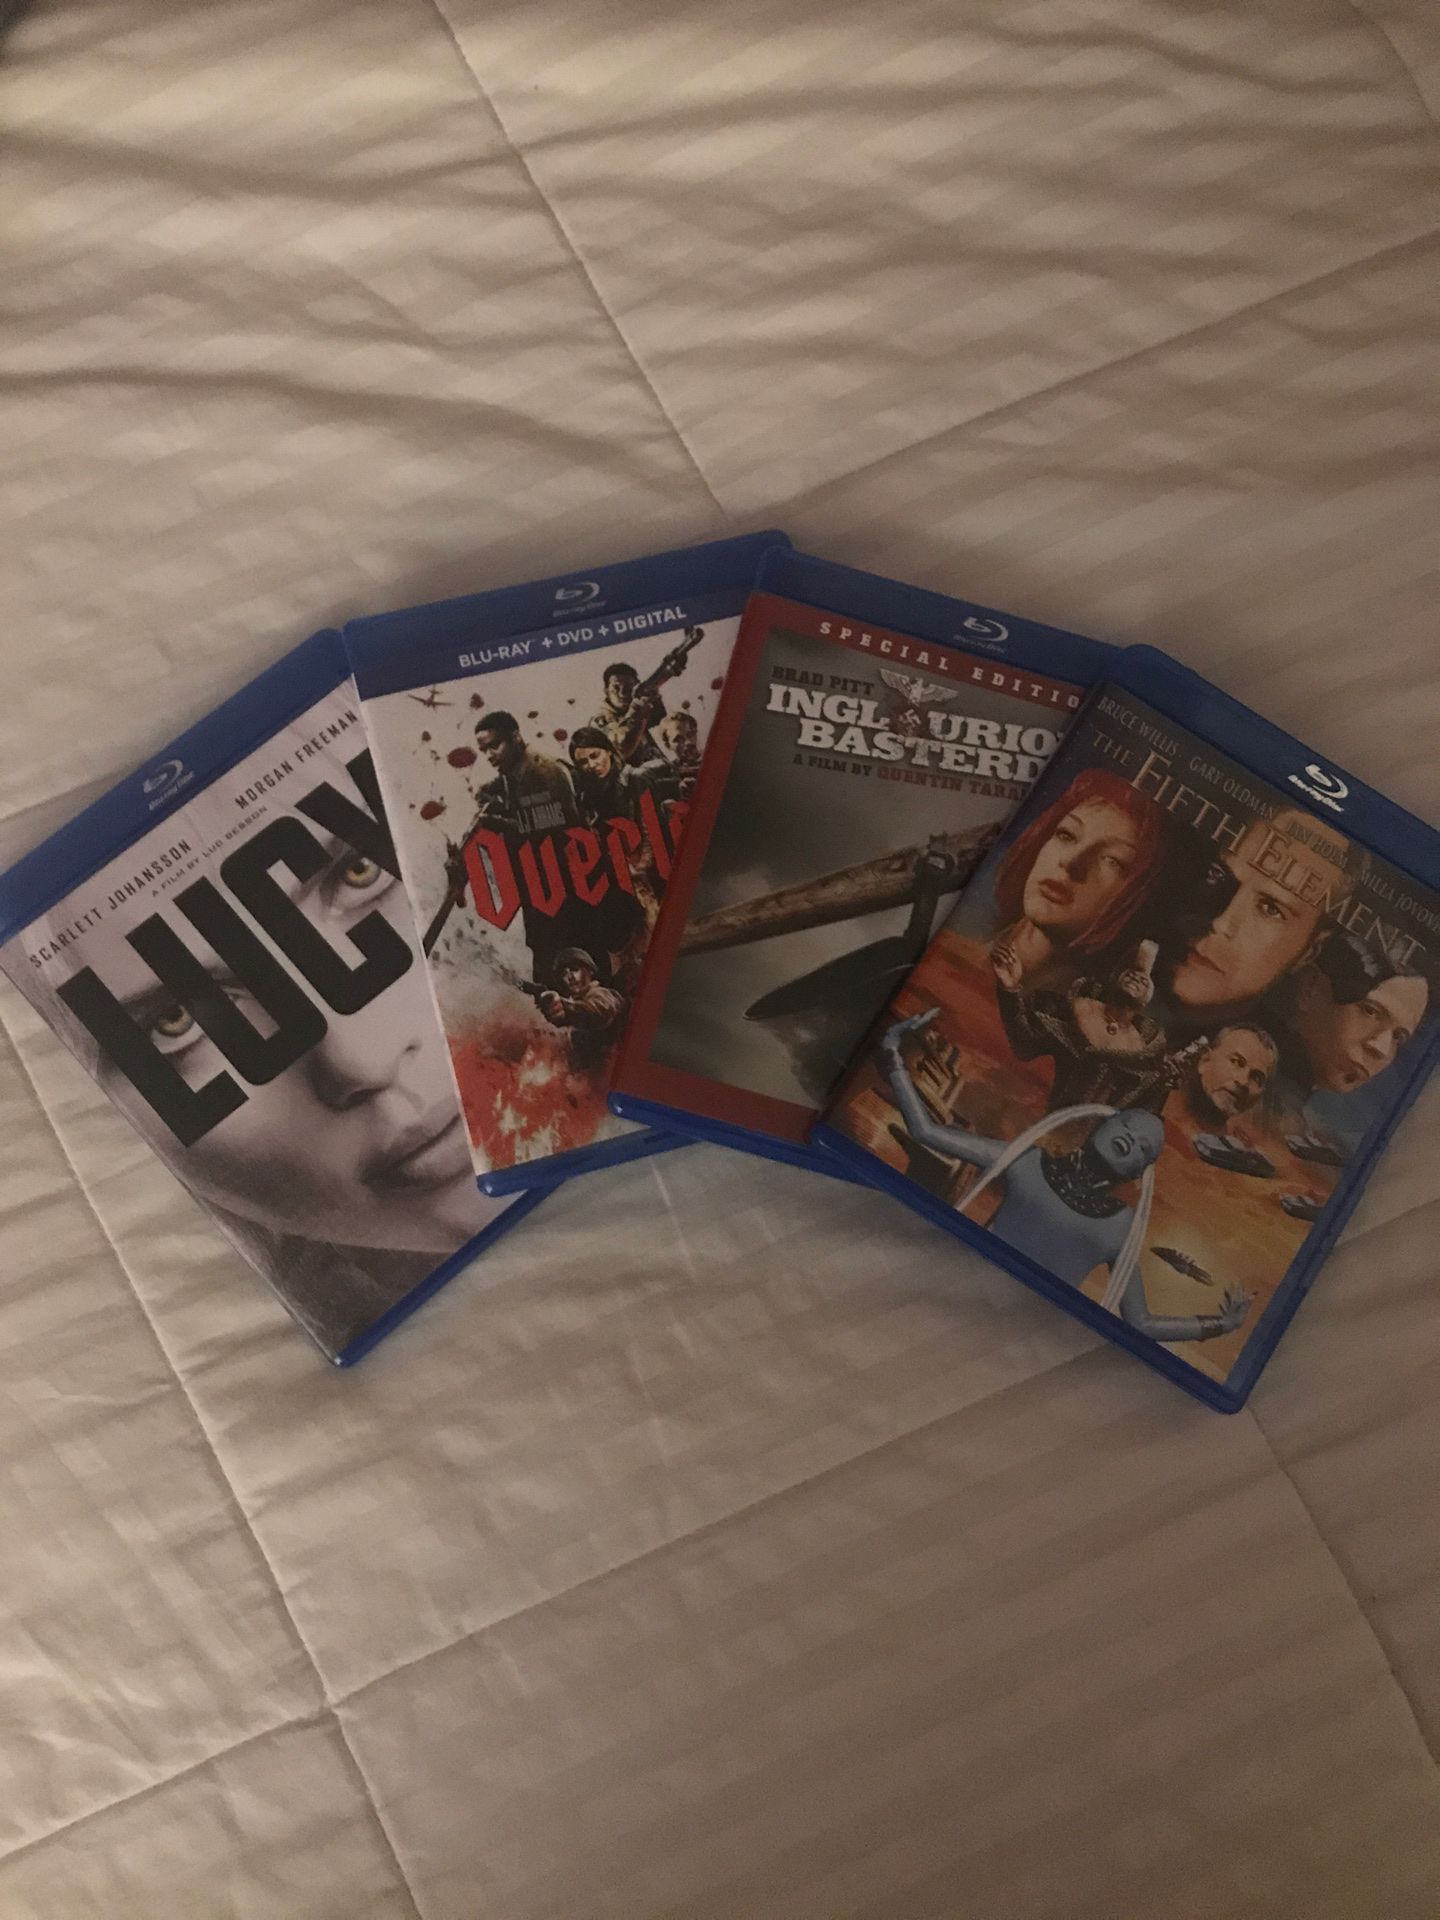 Blu-Ray movies